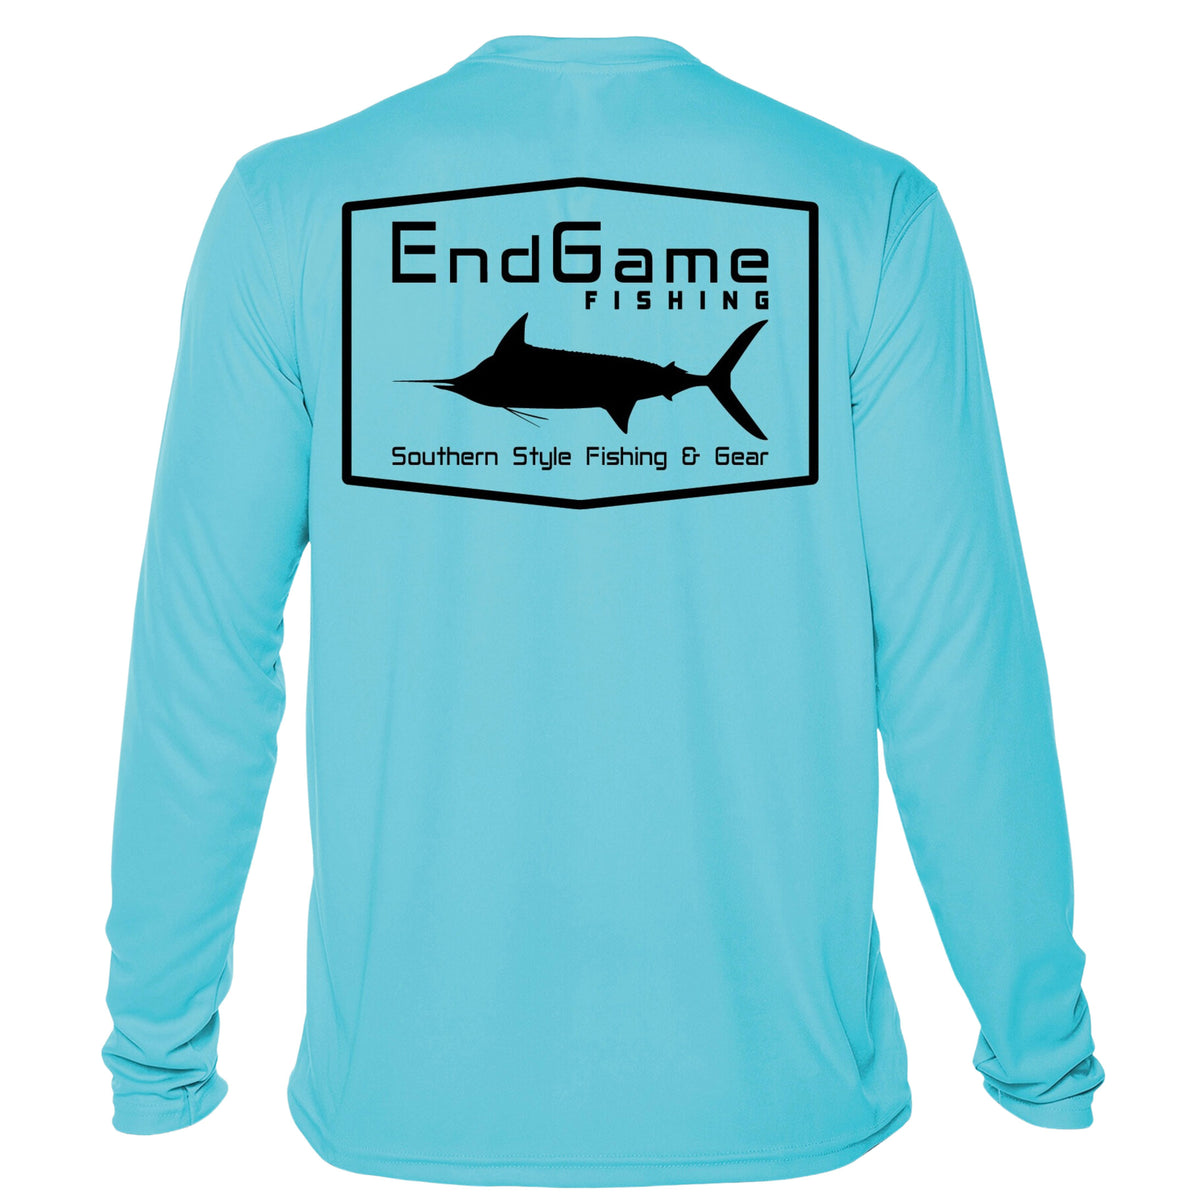 EndGame Fishing Performance Fishing Shirt - Ocean Blue